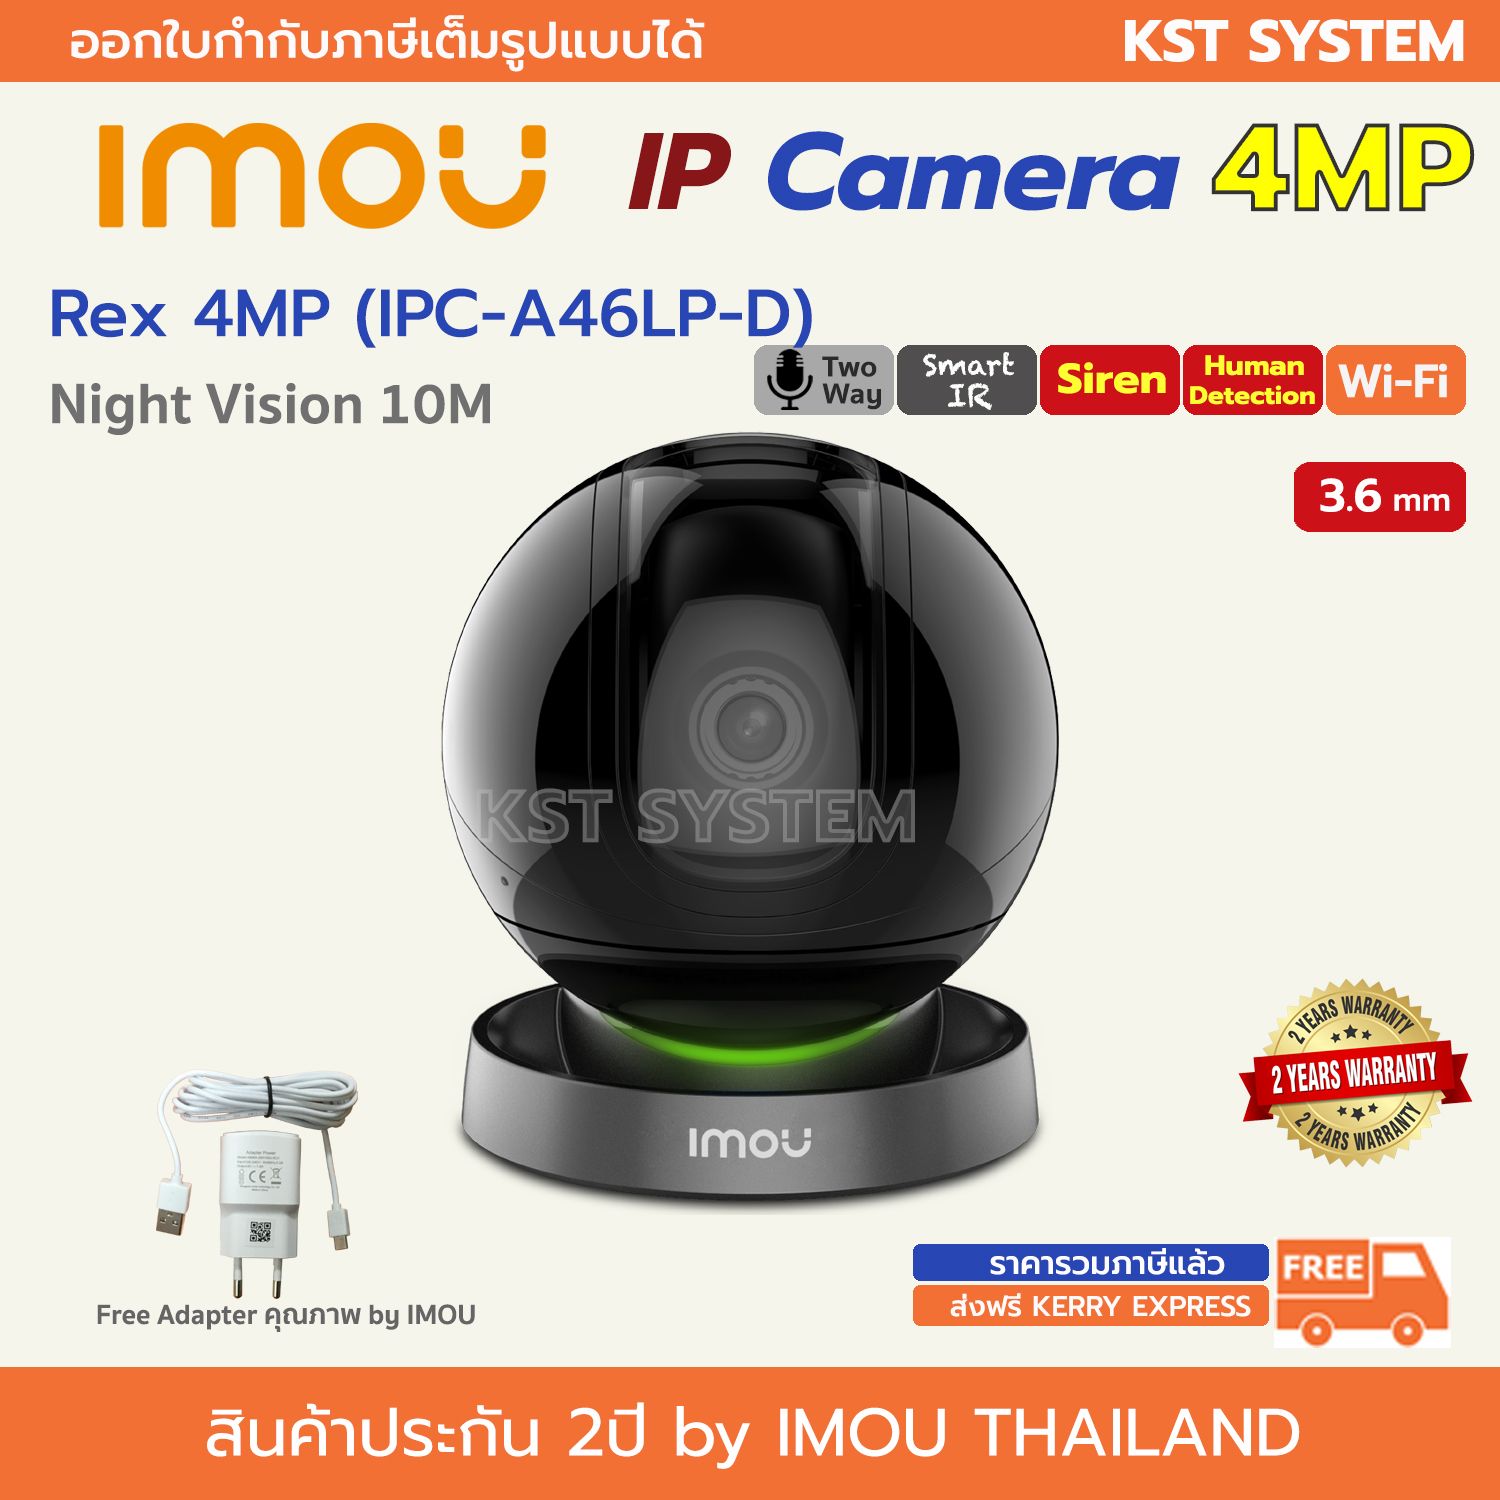 IPC-A46LP-IMOU - Caméra IP Imou 4MP 3.6mm WIFI PT Ranger Pro